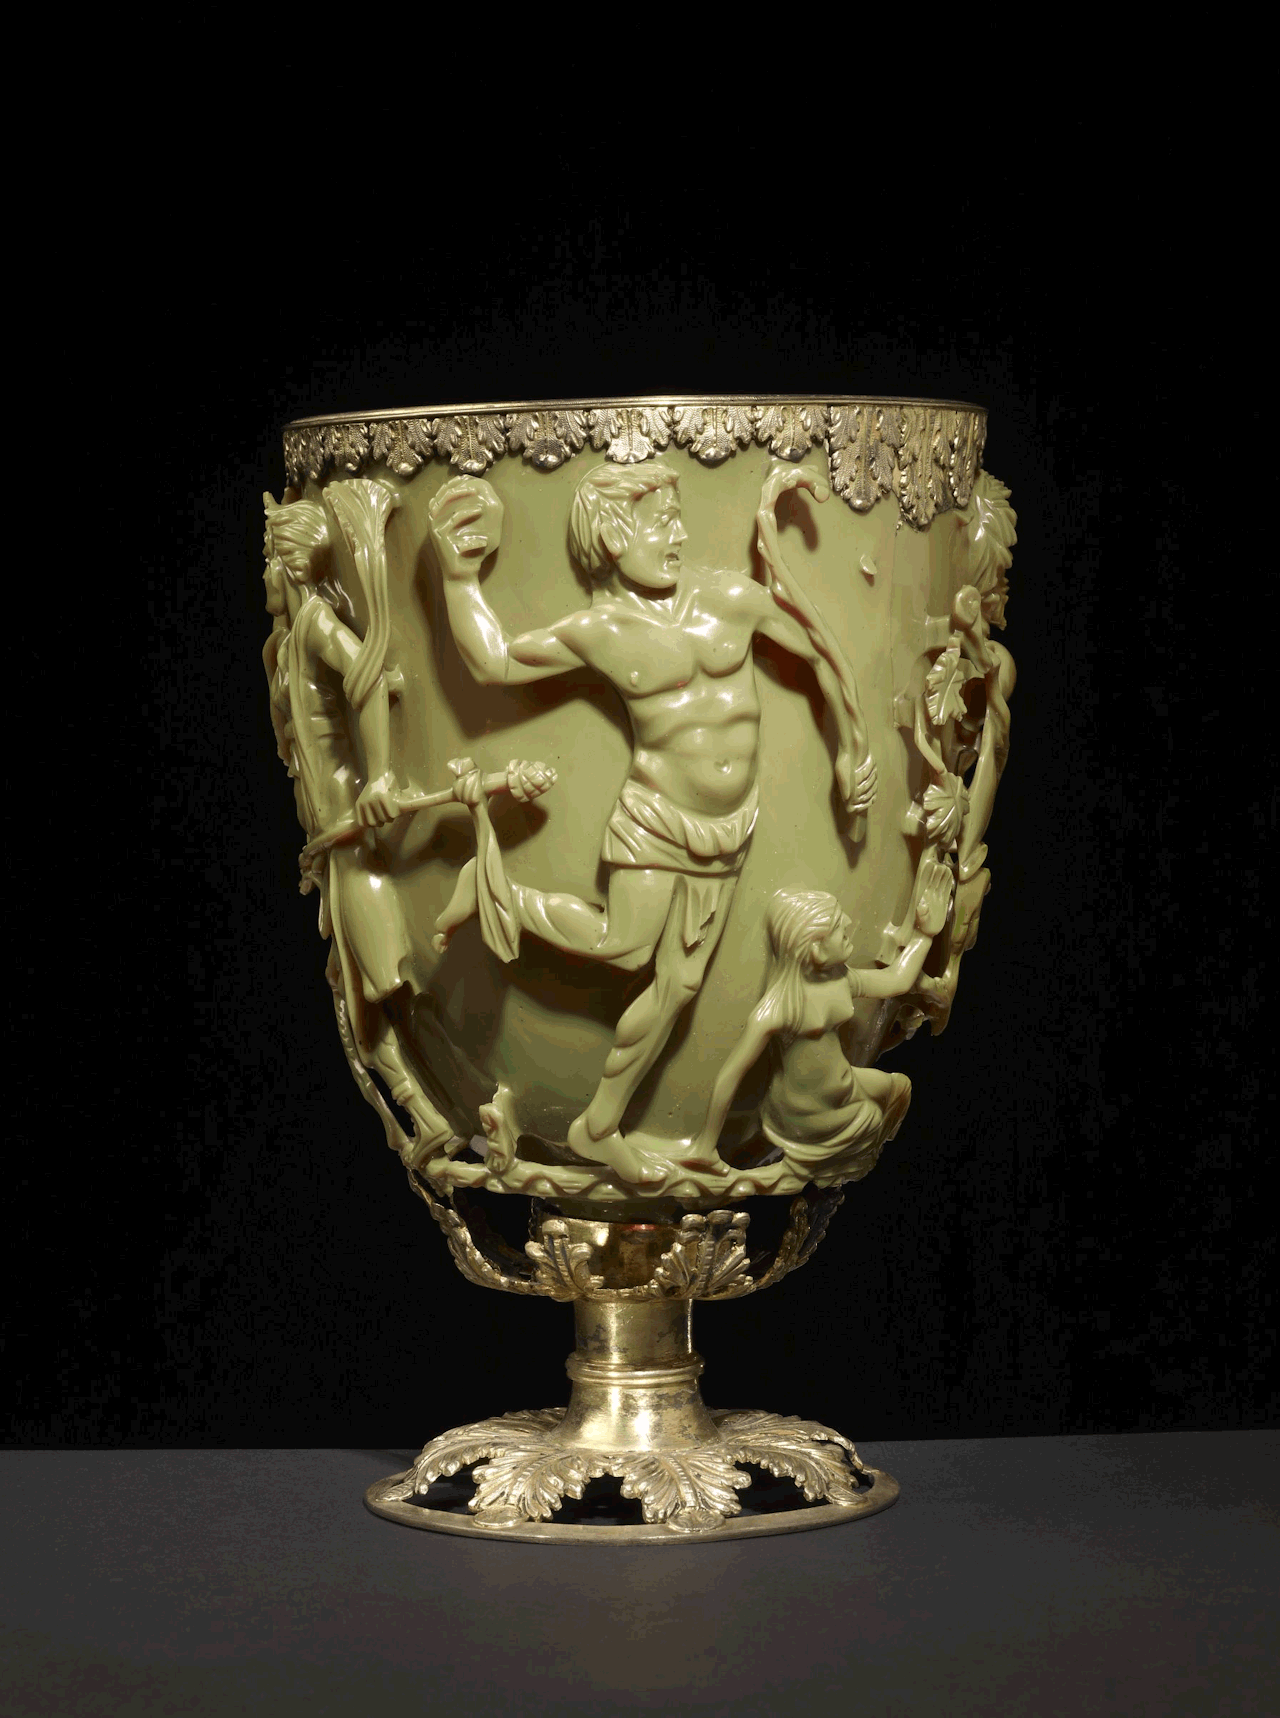 Roman Lycurgus Cup은 1,600년 된 옥 녹색 로마 성배입니다. 내부에 광원을 넣으면 마법처럼 색상이 바뀝니다. 정면에서 비추면 옥색으로 보이지만 뒤에서나 내부에서 비추면 핏빛 레드입니다.